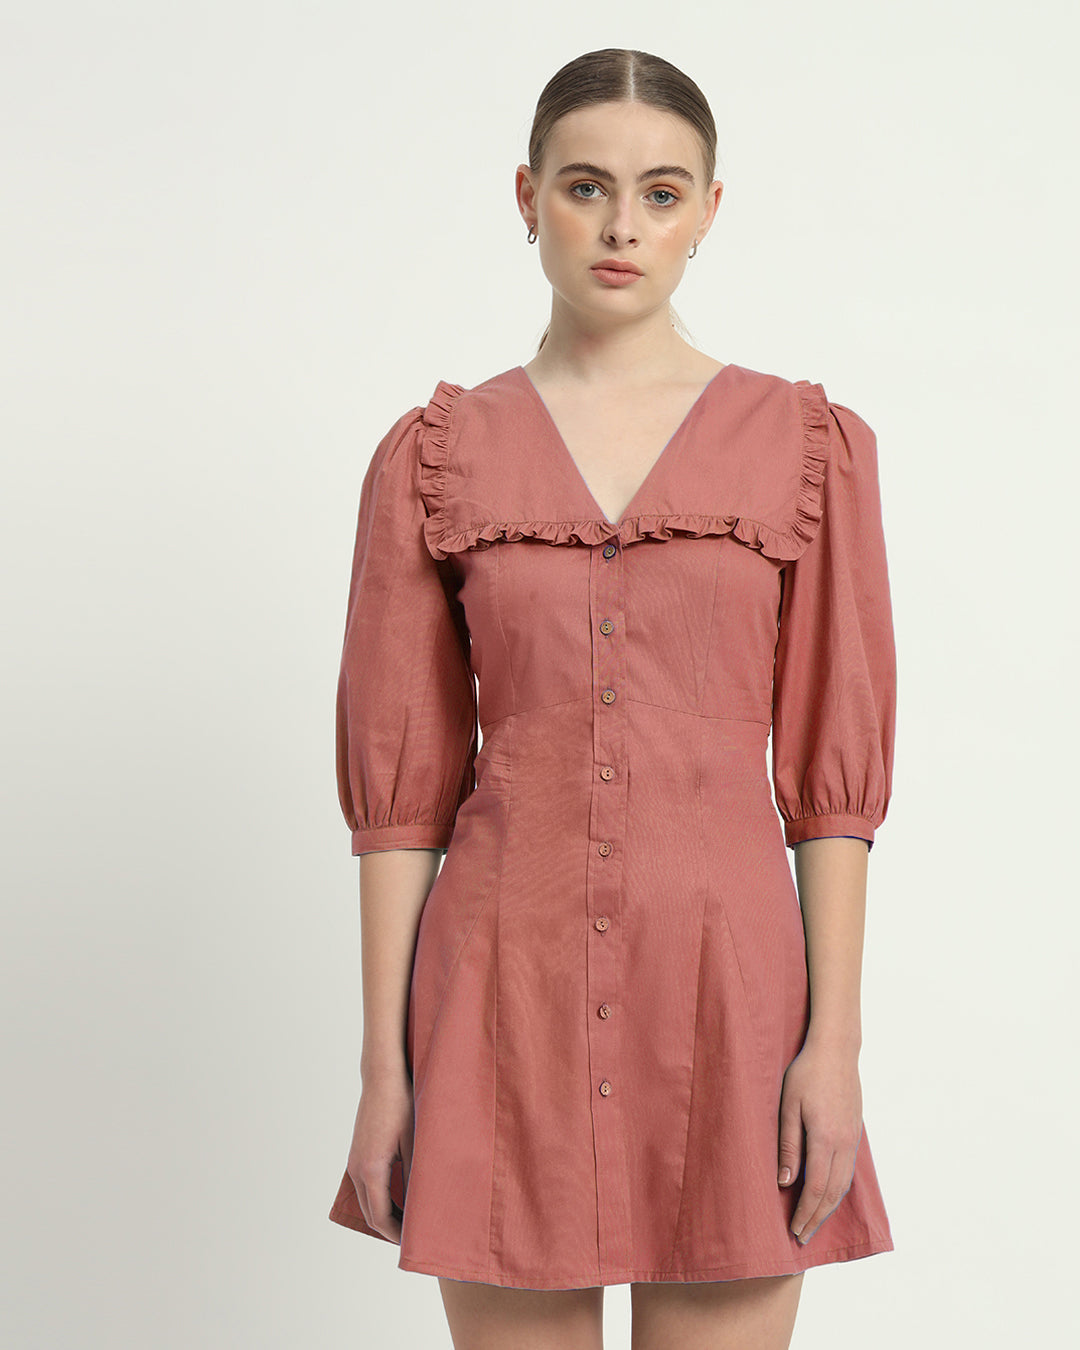 The Isabela  Ivory Pink  Cotton Dress